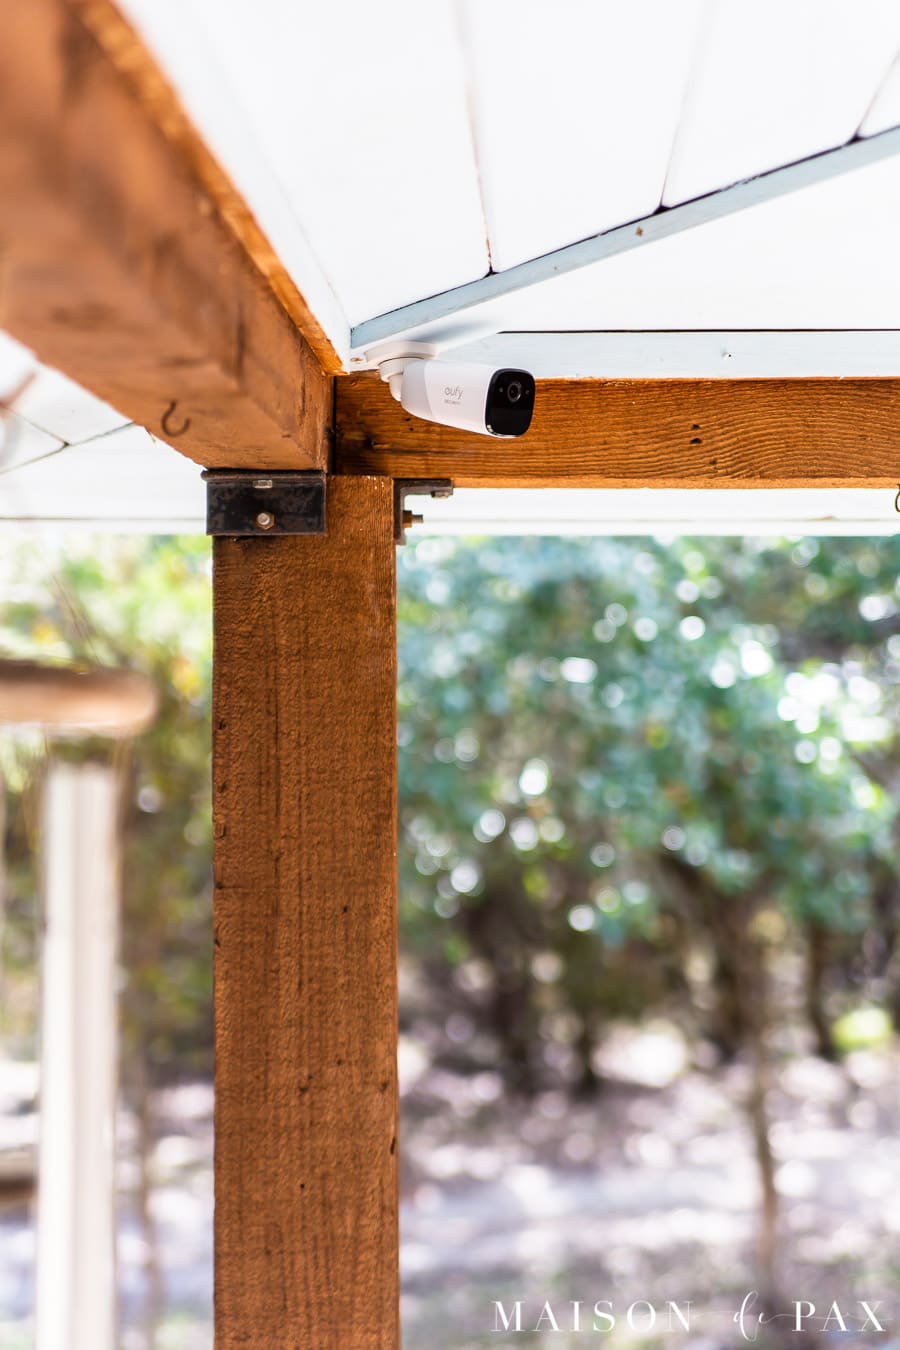 outdoor security camera in porch roof | Maison de Pax